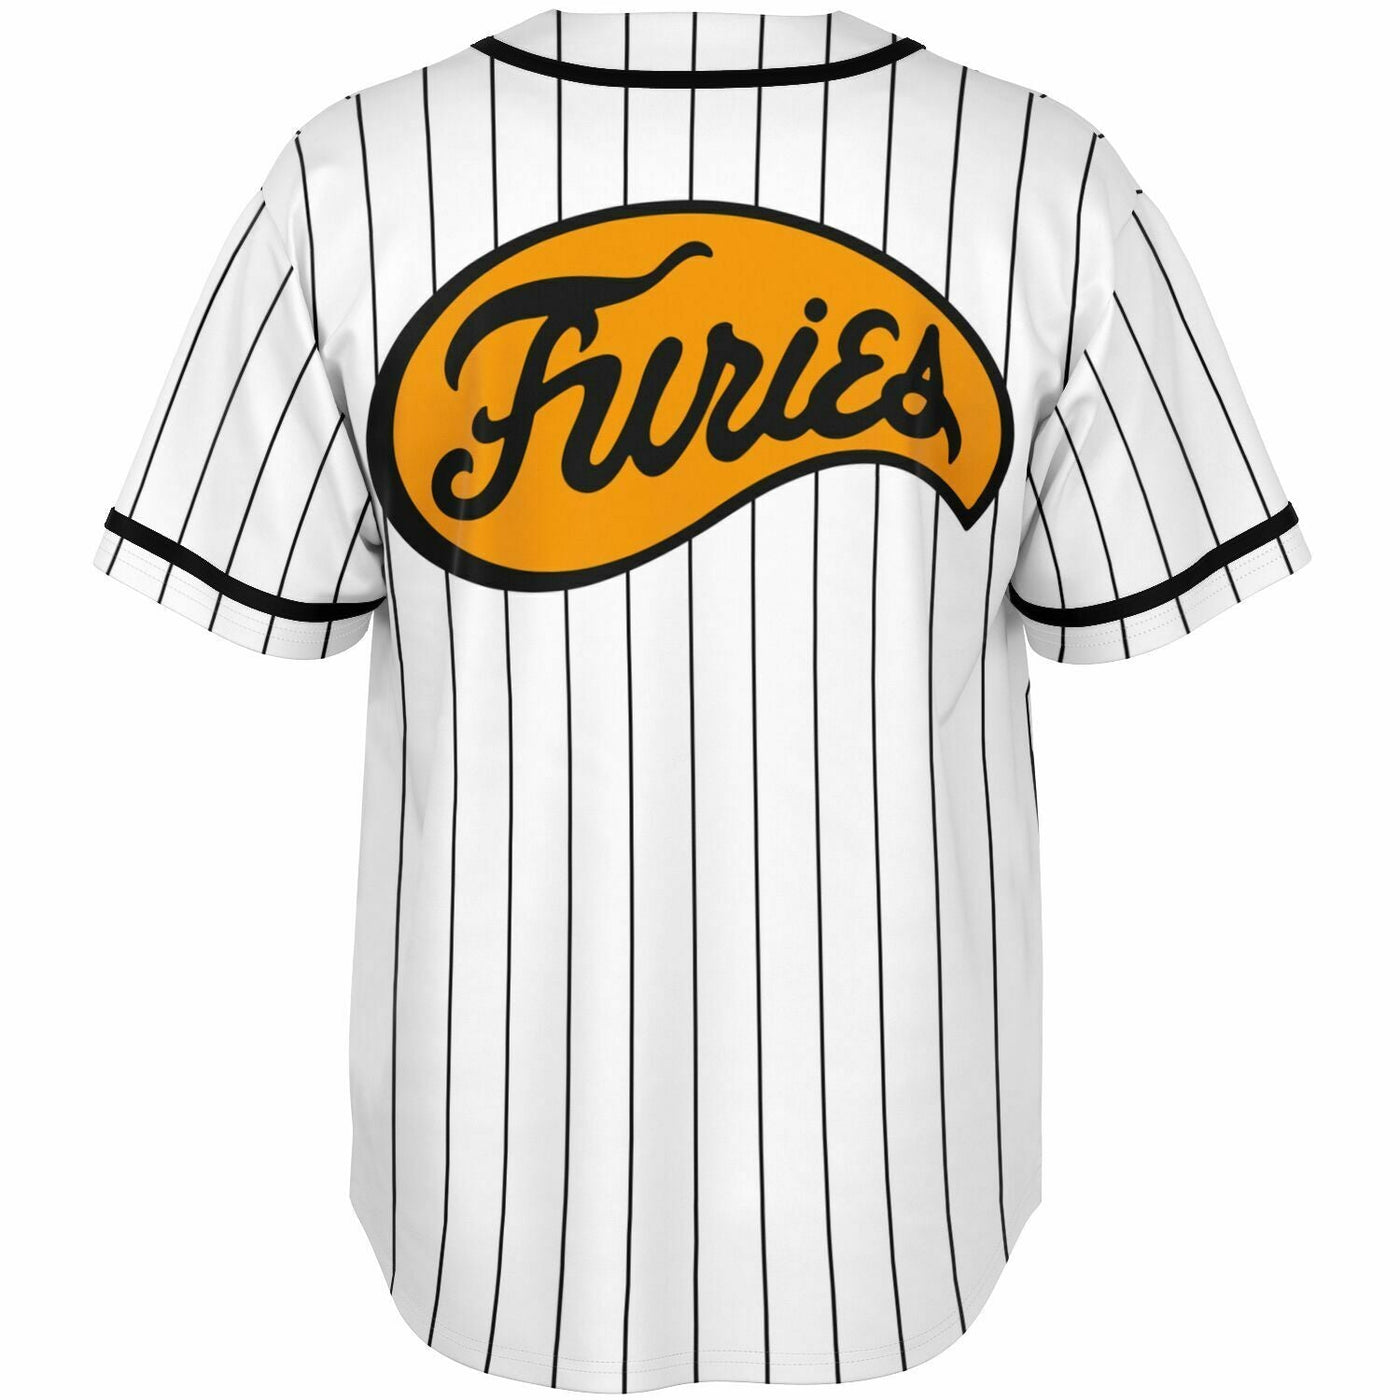 The Furies Baseball Jersey - The Warriors Riverside Gang